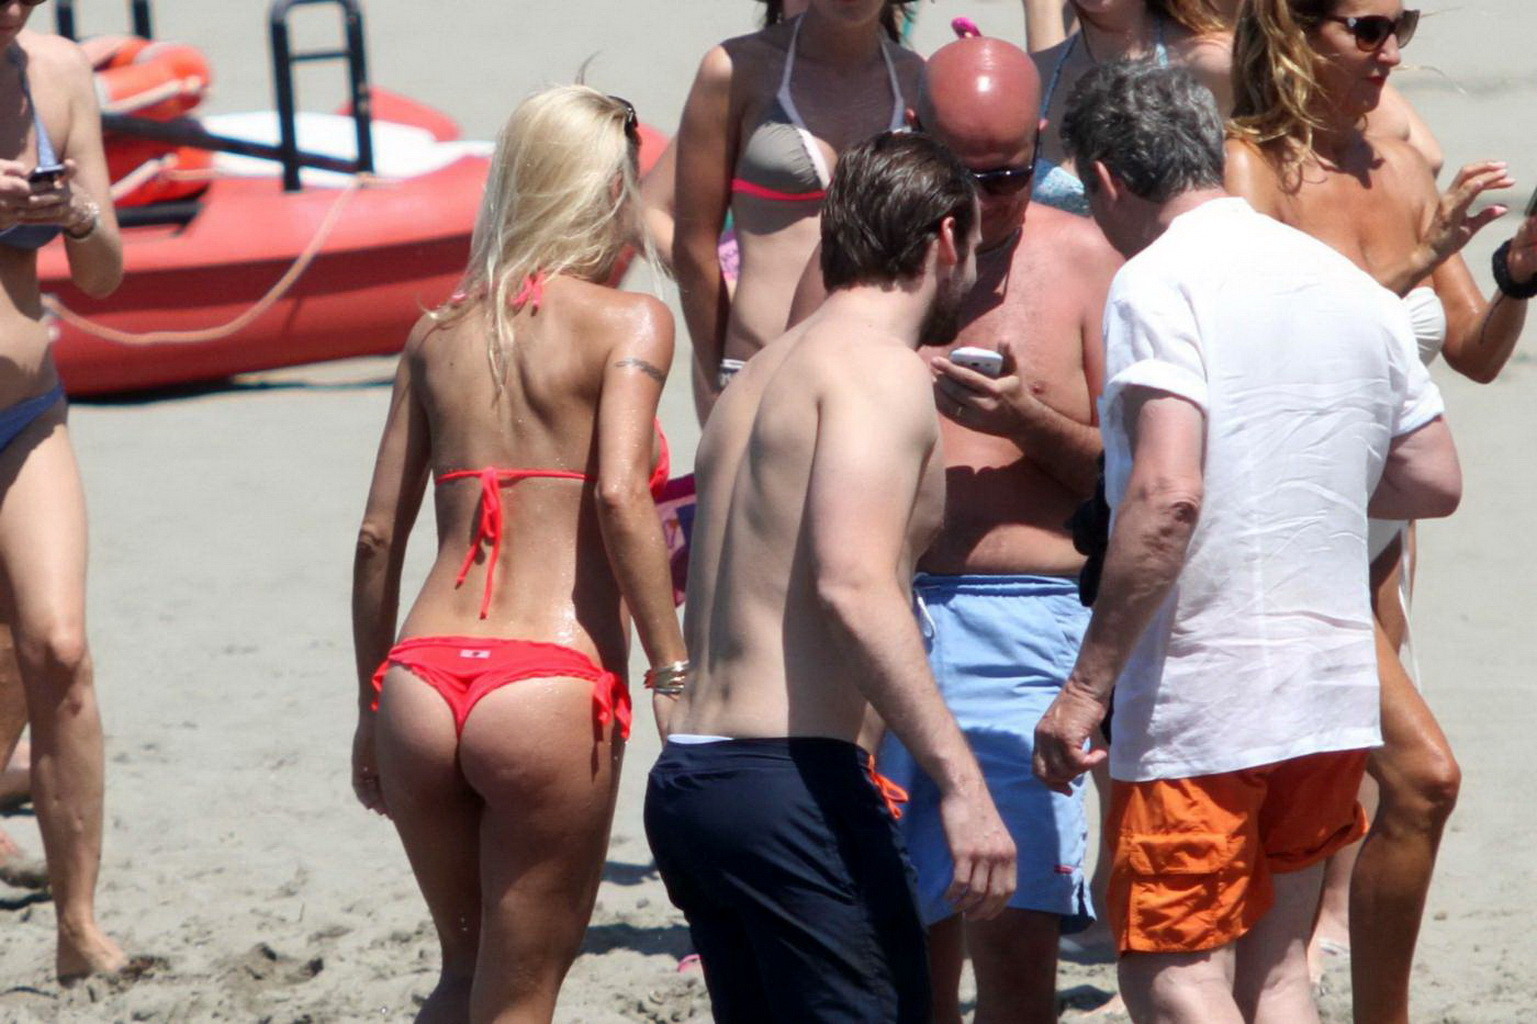 Michelle hunziker embarazada con un bikini en la playa de forte dei marmi, ita
 #75227924